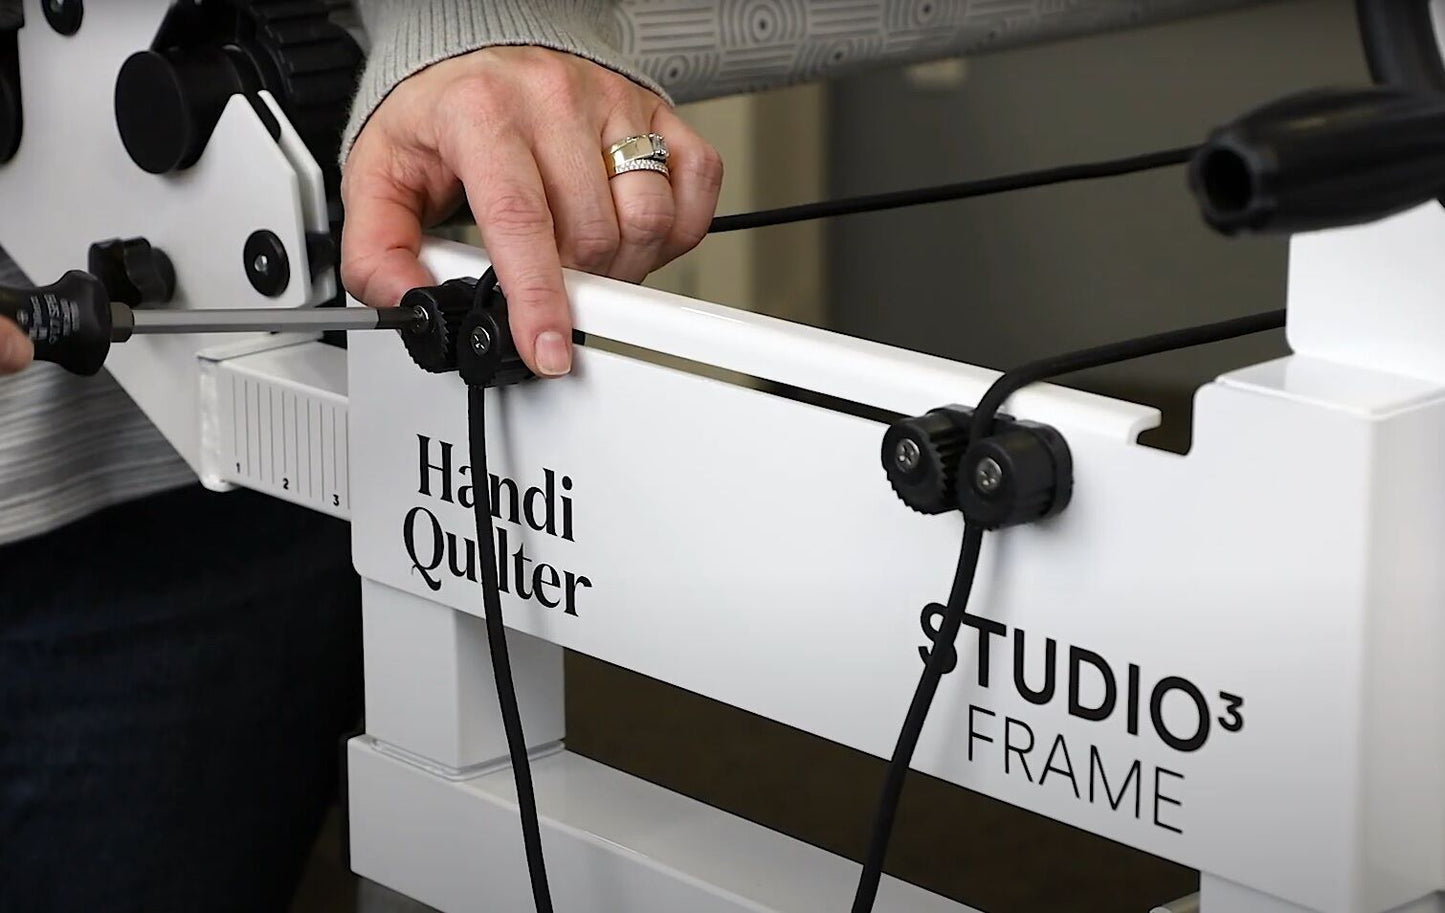 Handi Quilter Studio3 Frame